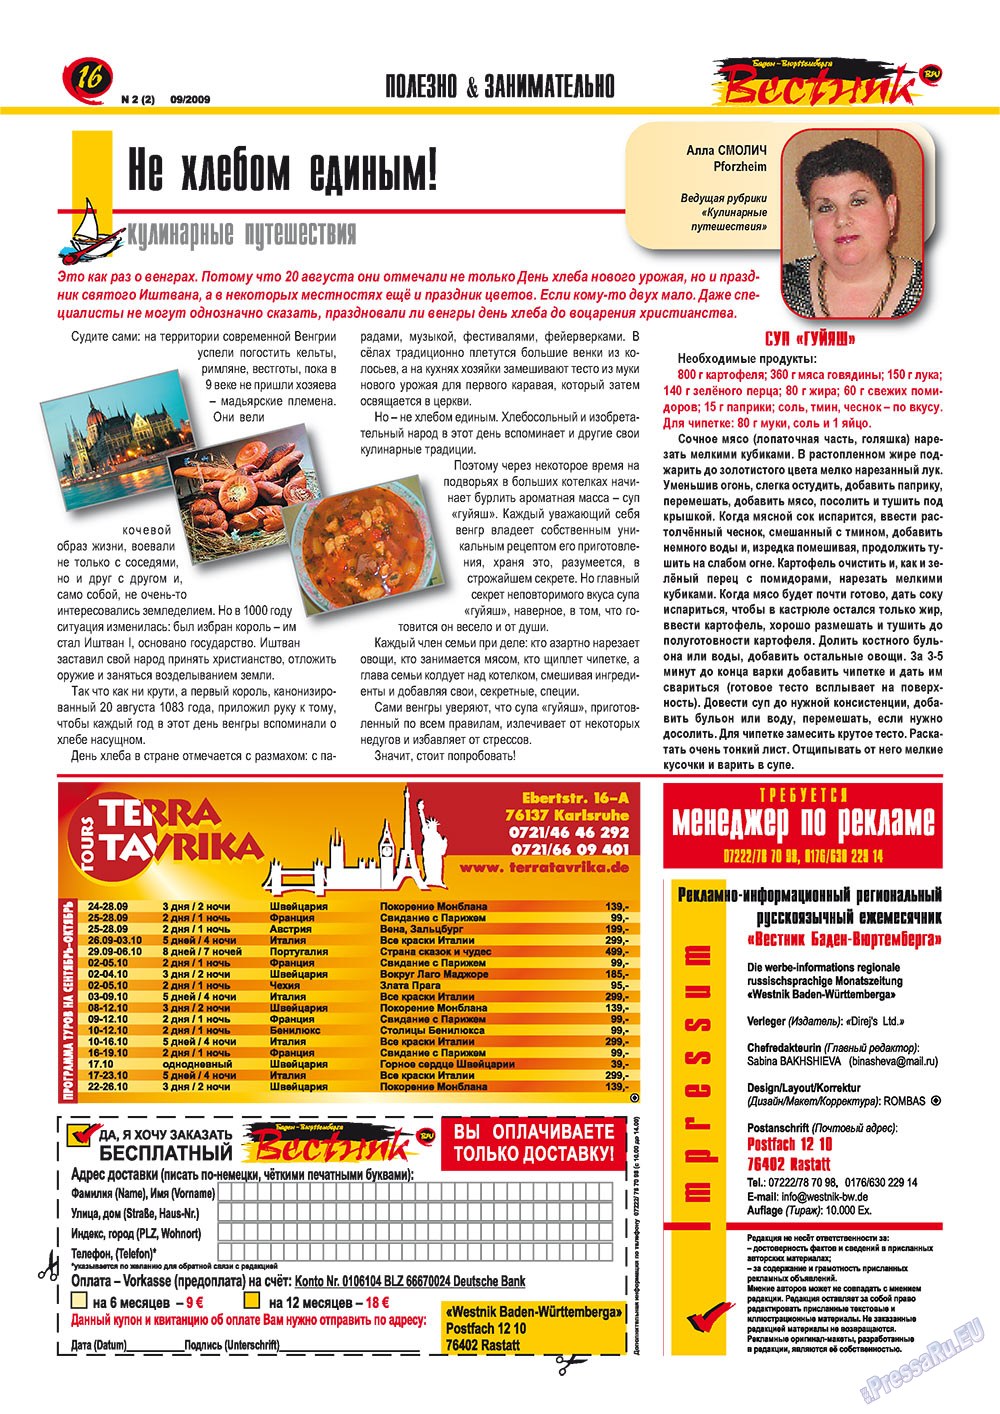 Вестник-info (журнал). 2009 год, номер 2, стр. 16